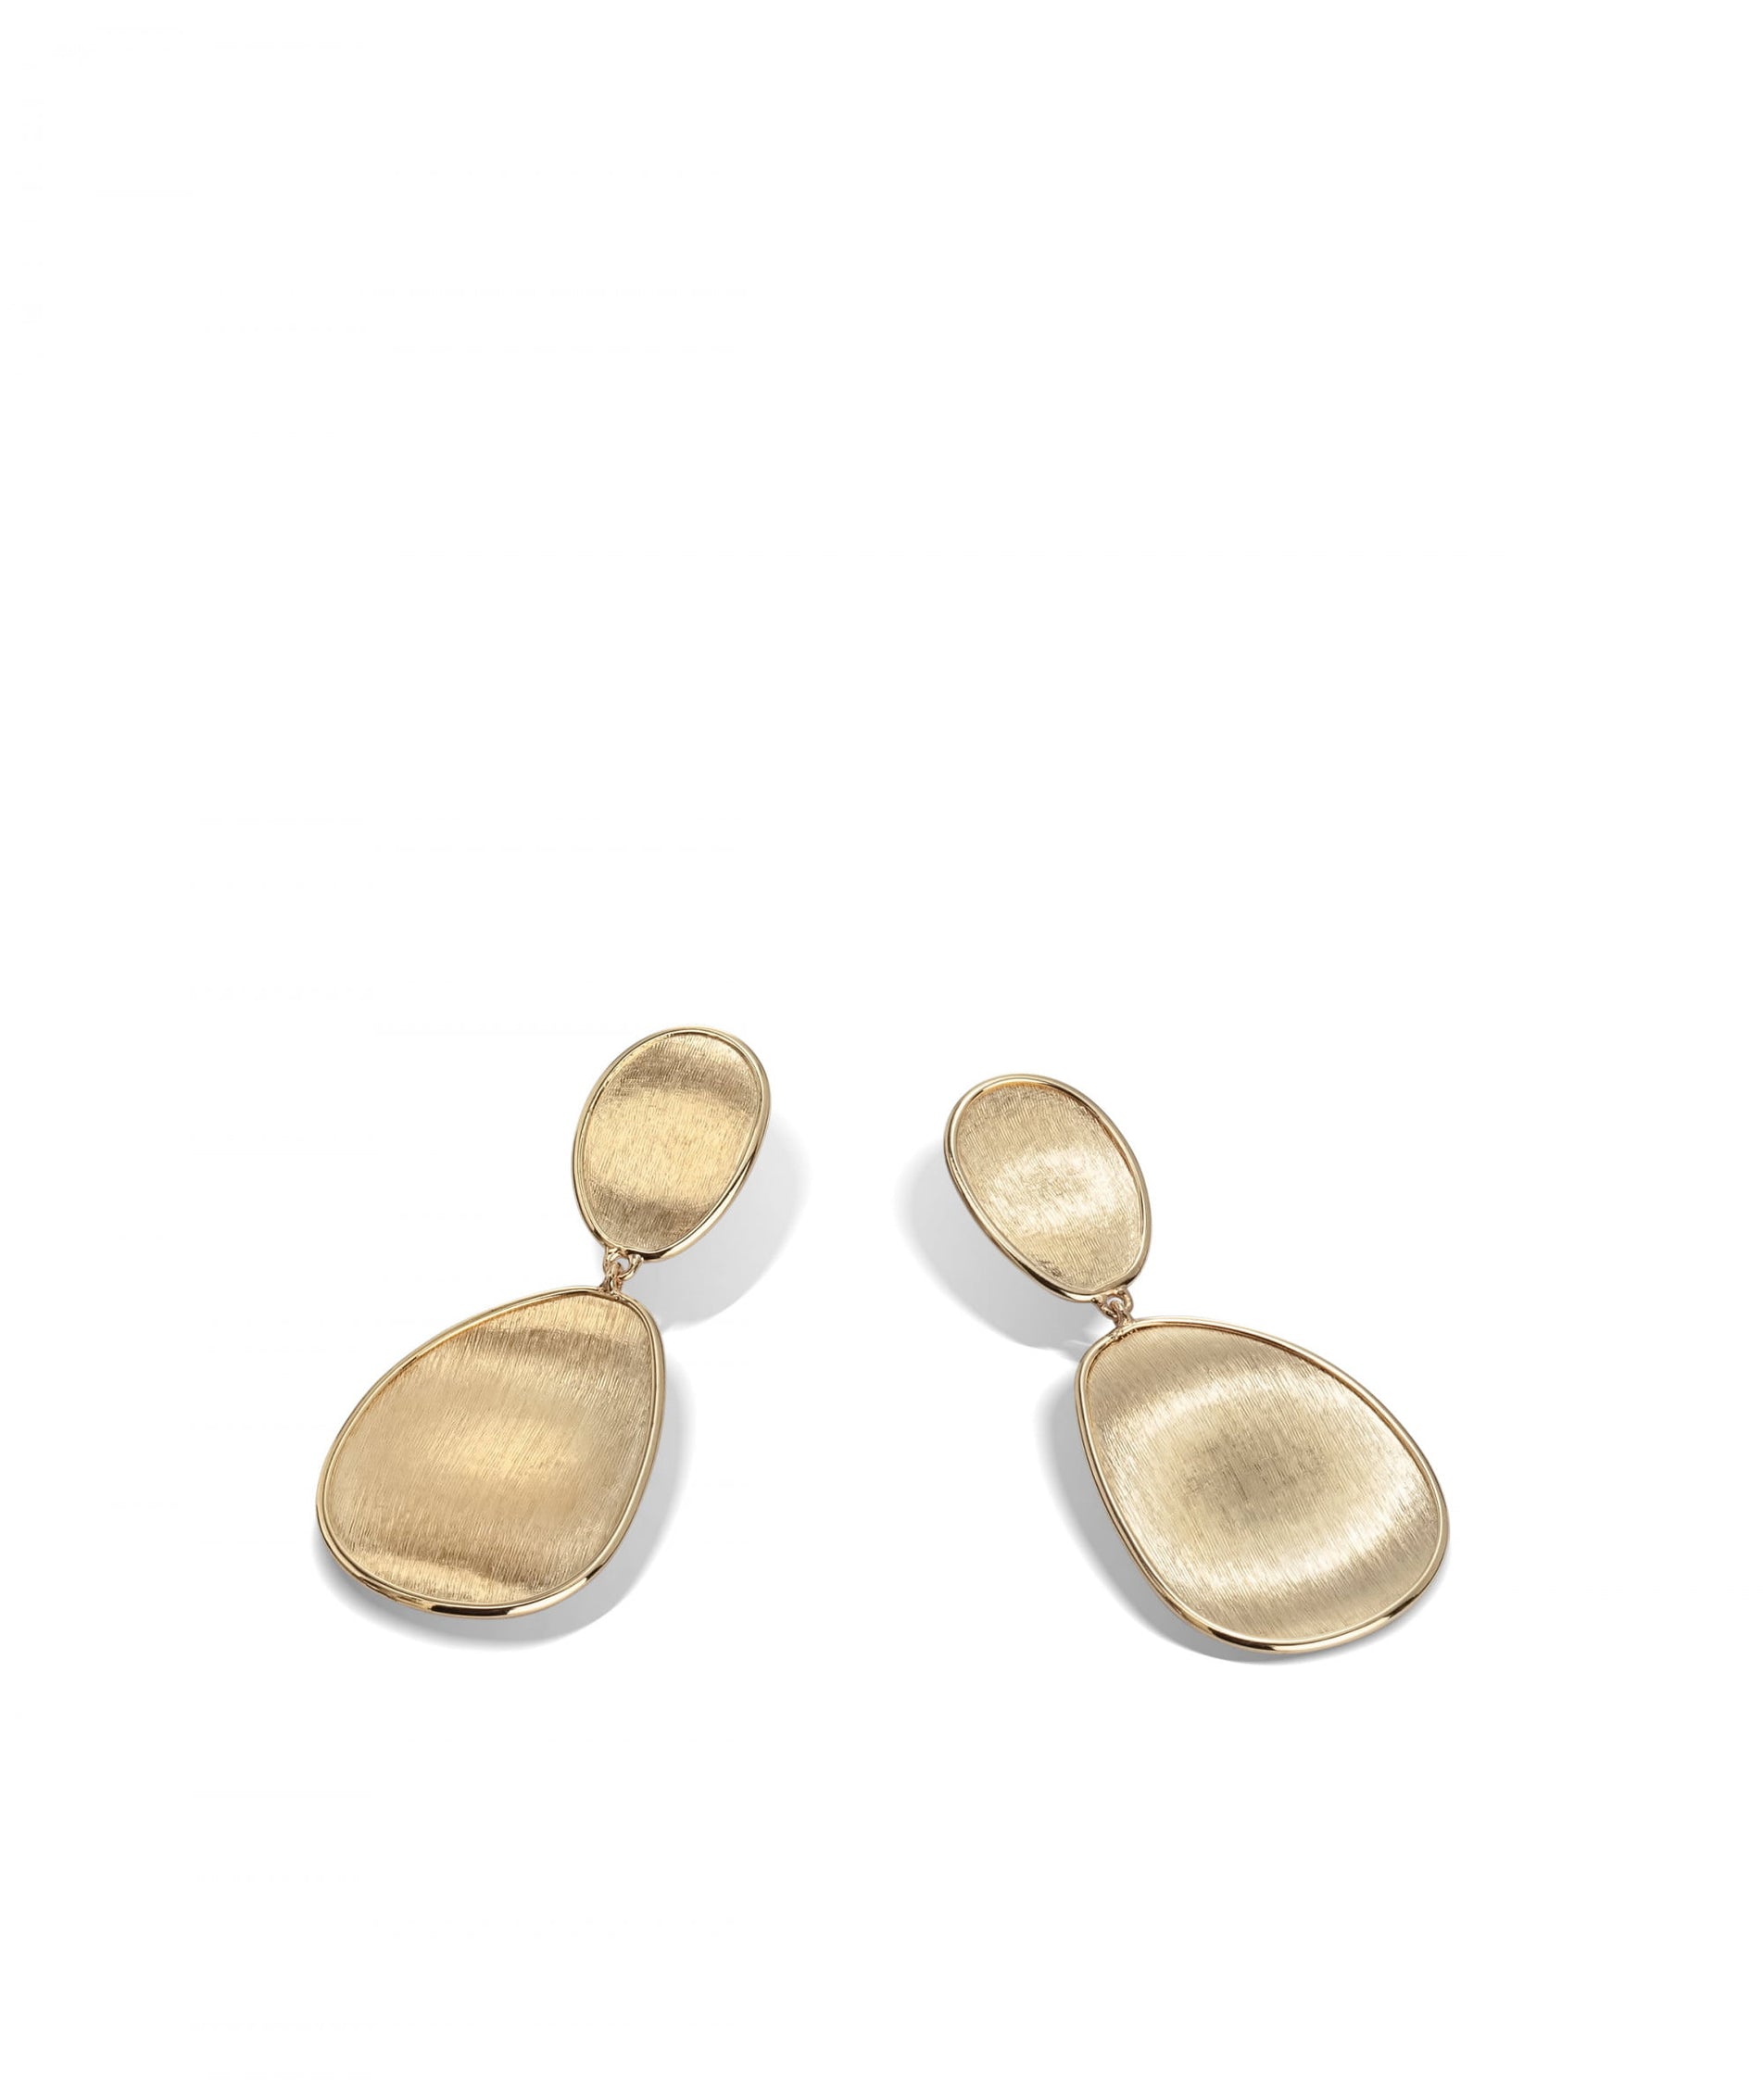 Lunaria Earrings in 18k Yellow Gold Double Drop Small - Orsini Jewellers NZ